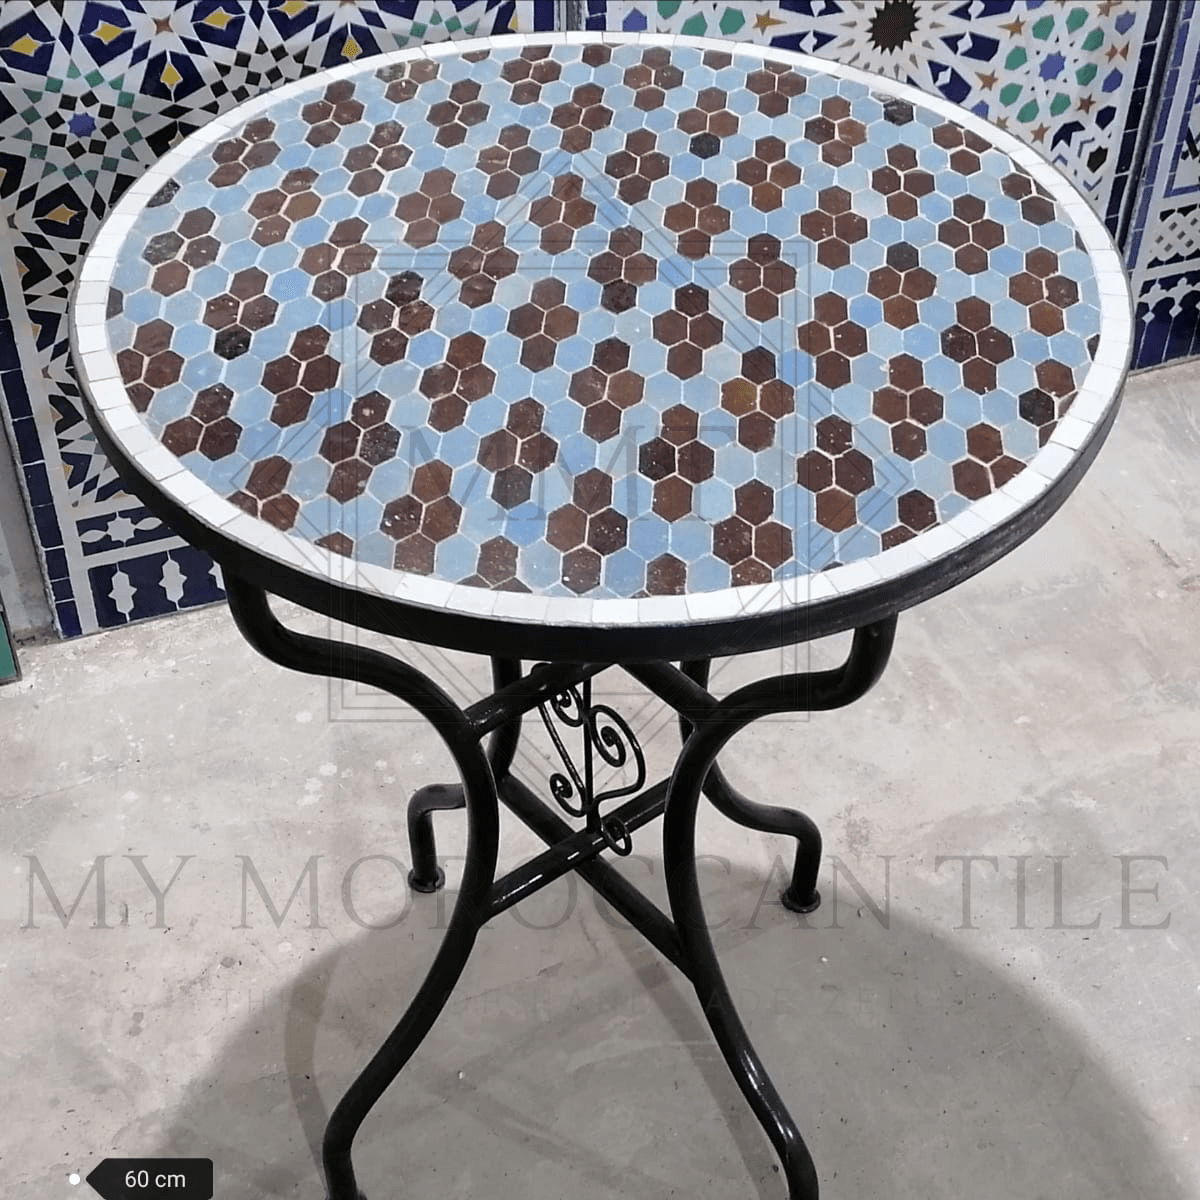 Handmade Moroccan Mosaic Table 2106-02